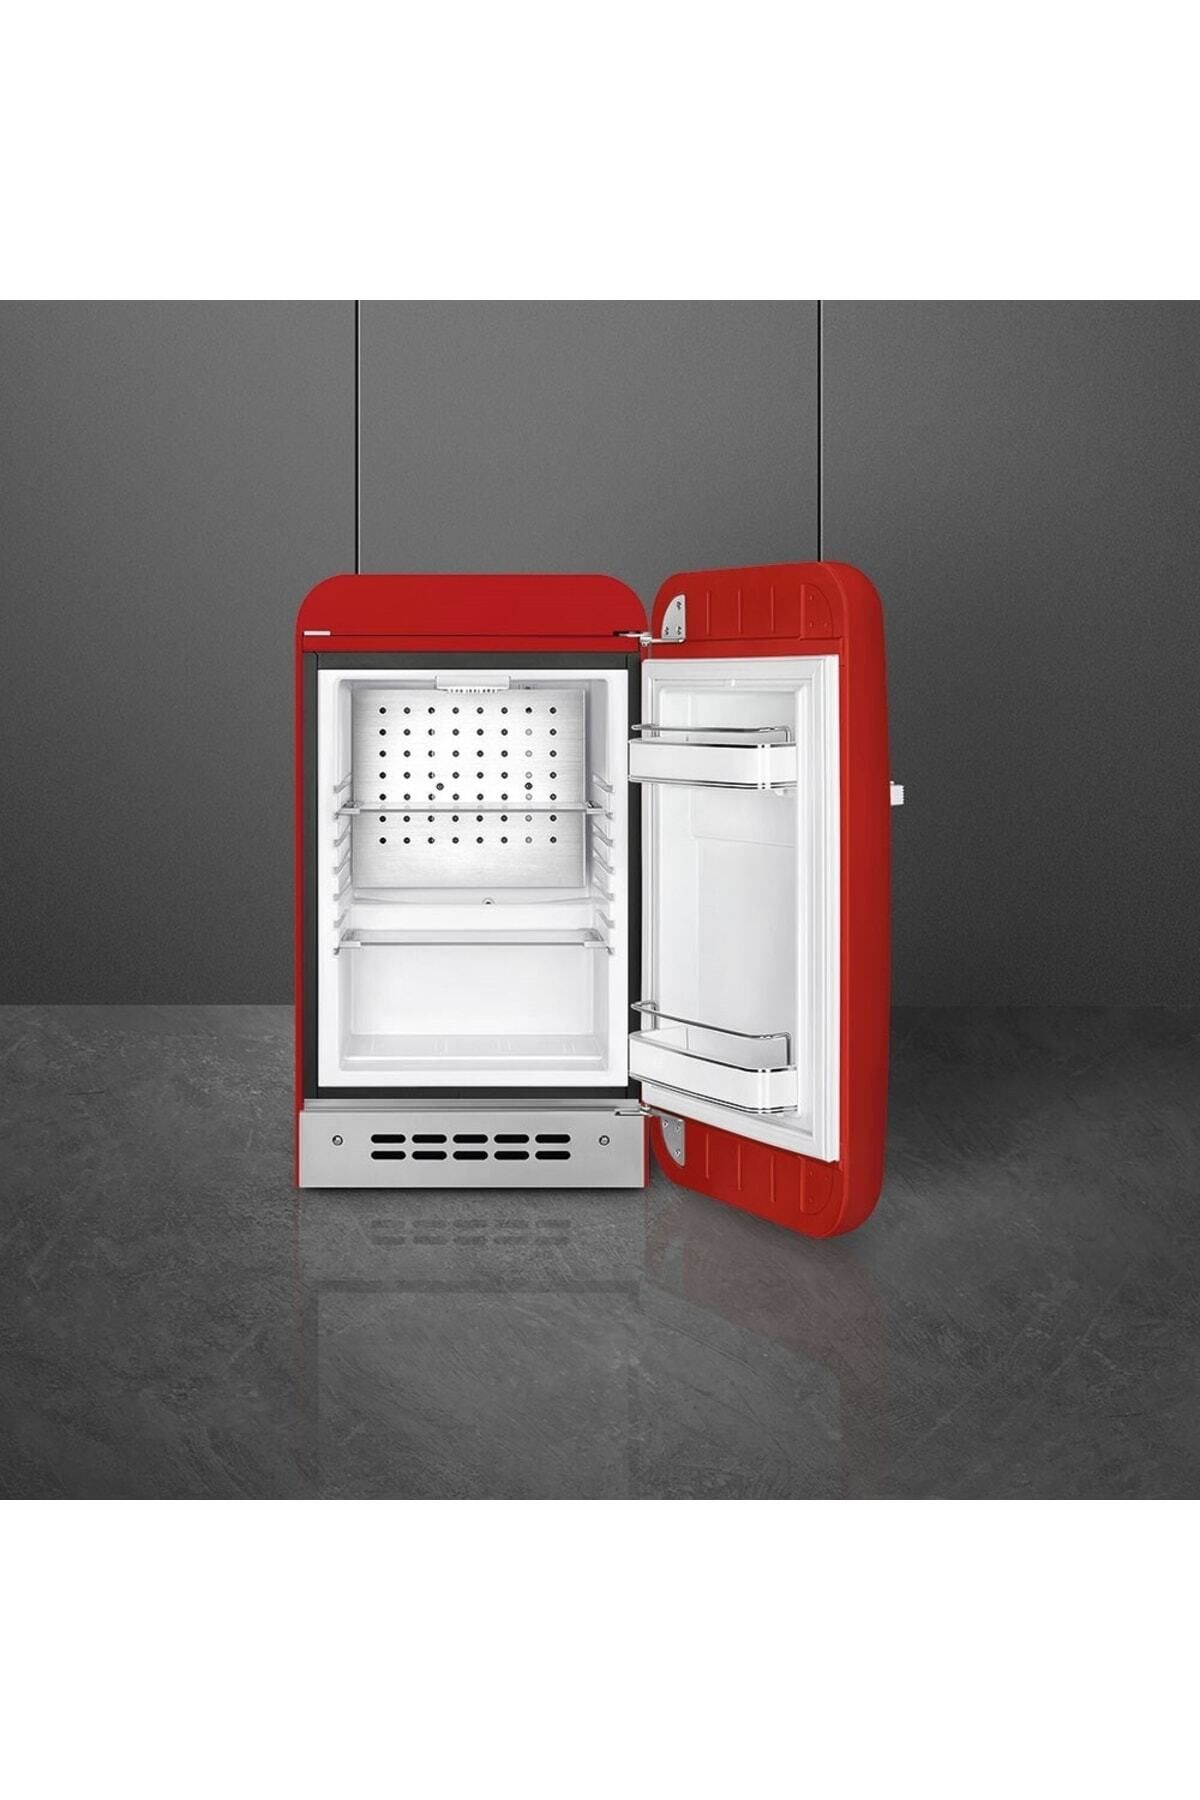 Smeg Fab5 Retmo Mini Buzdolabı Kırmızı Sağ Menteşe